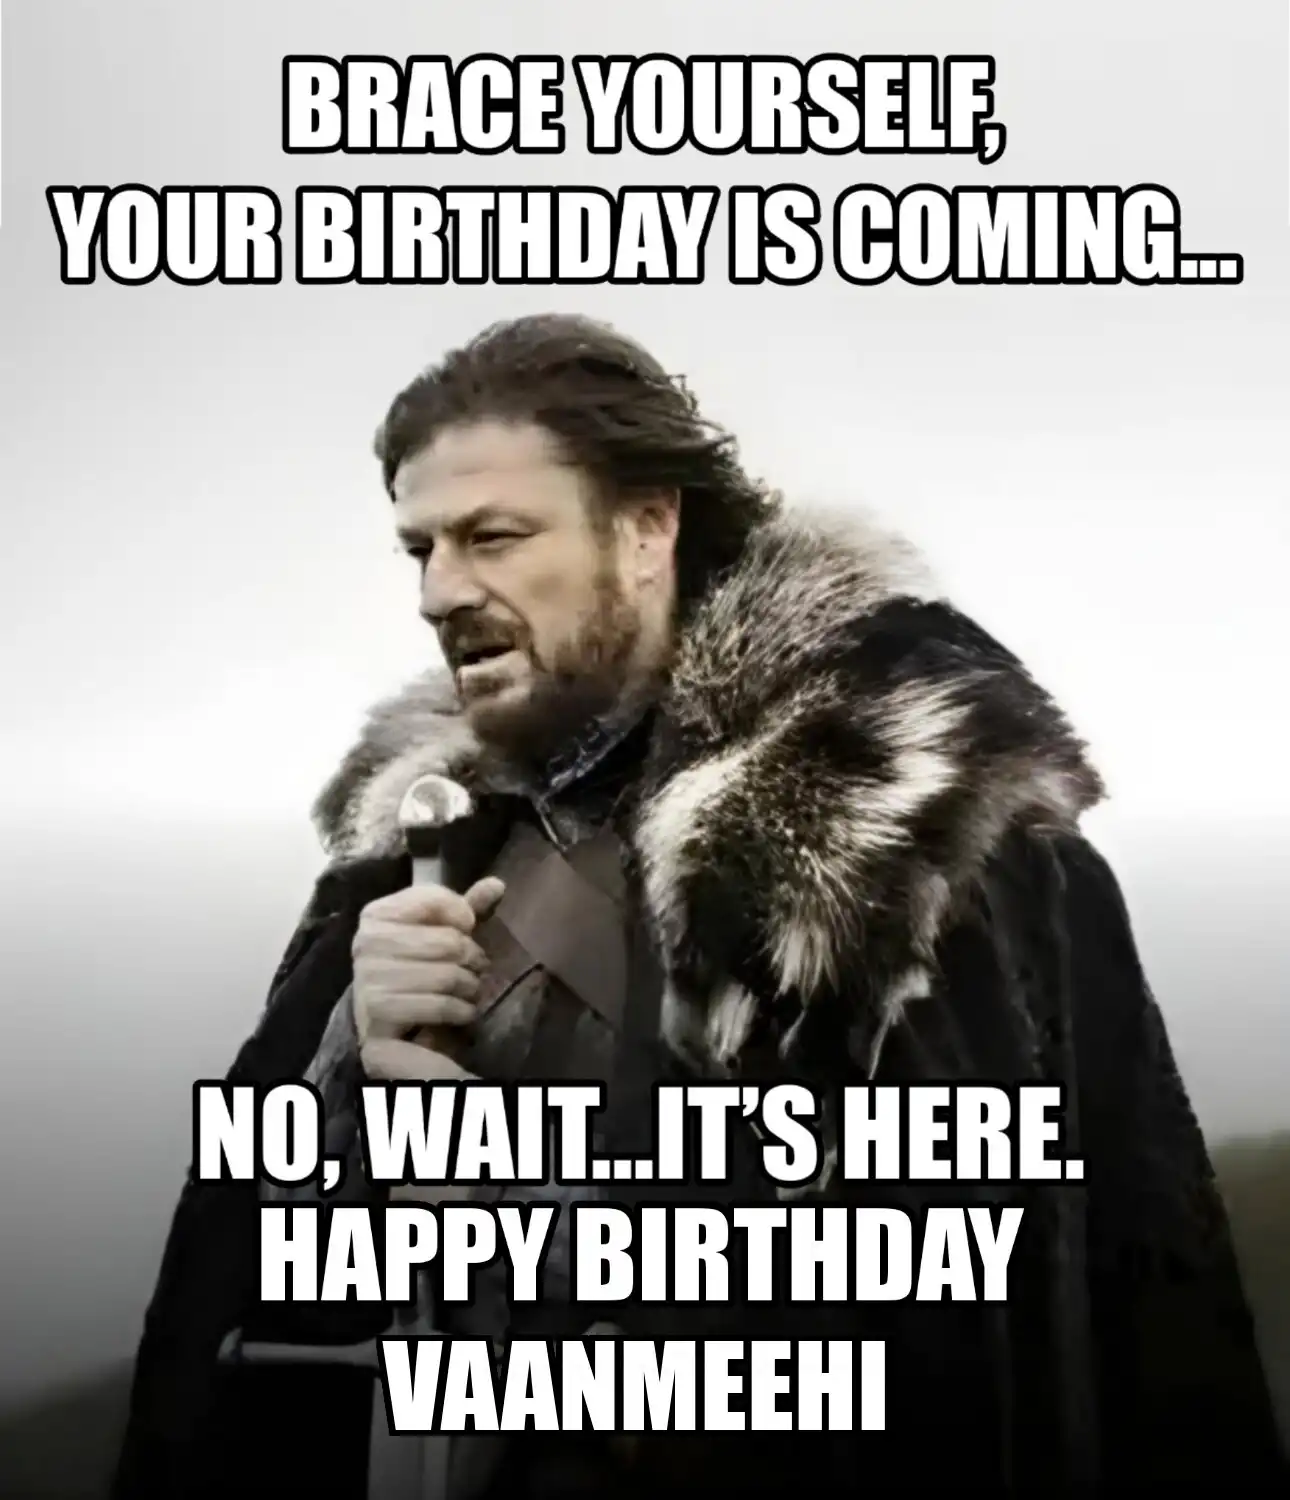 Happy Birthday Vaanmeehi Brace Yourself Your Birthday Is Coming Meme